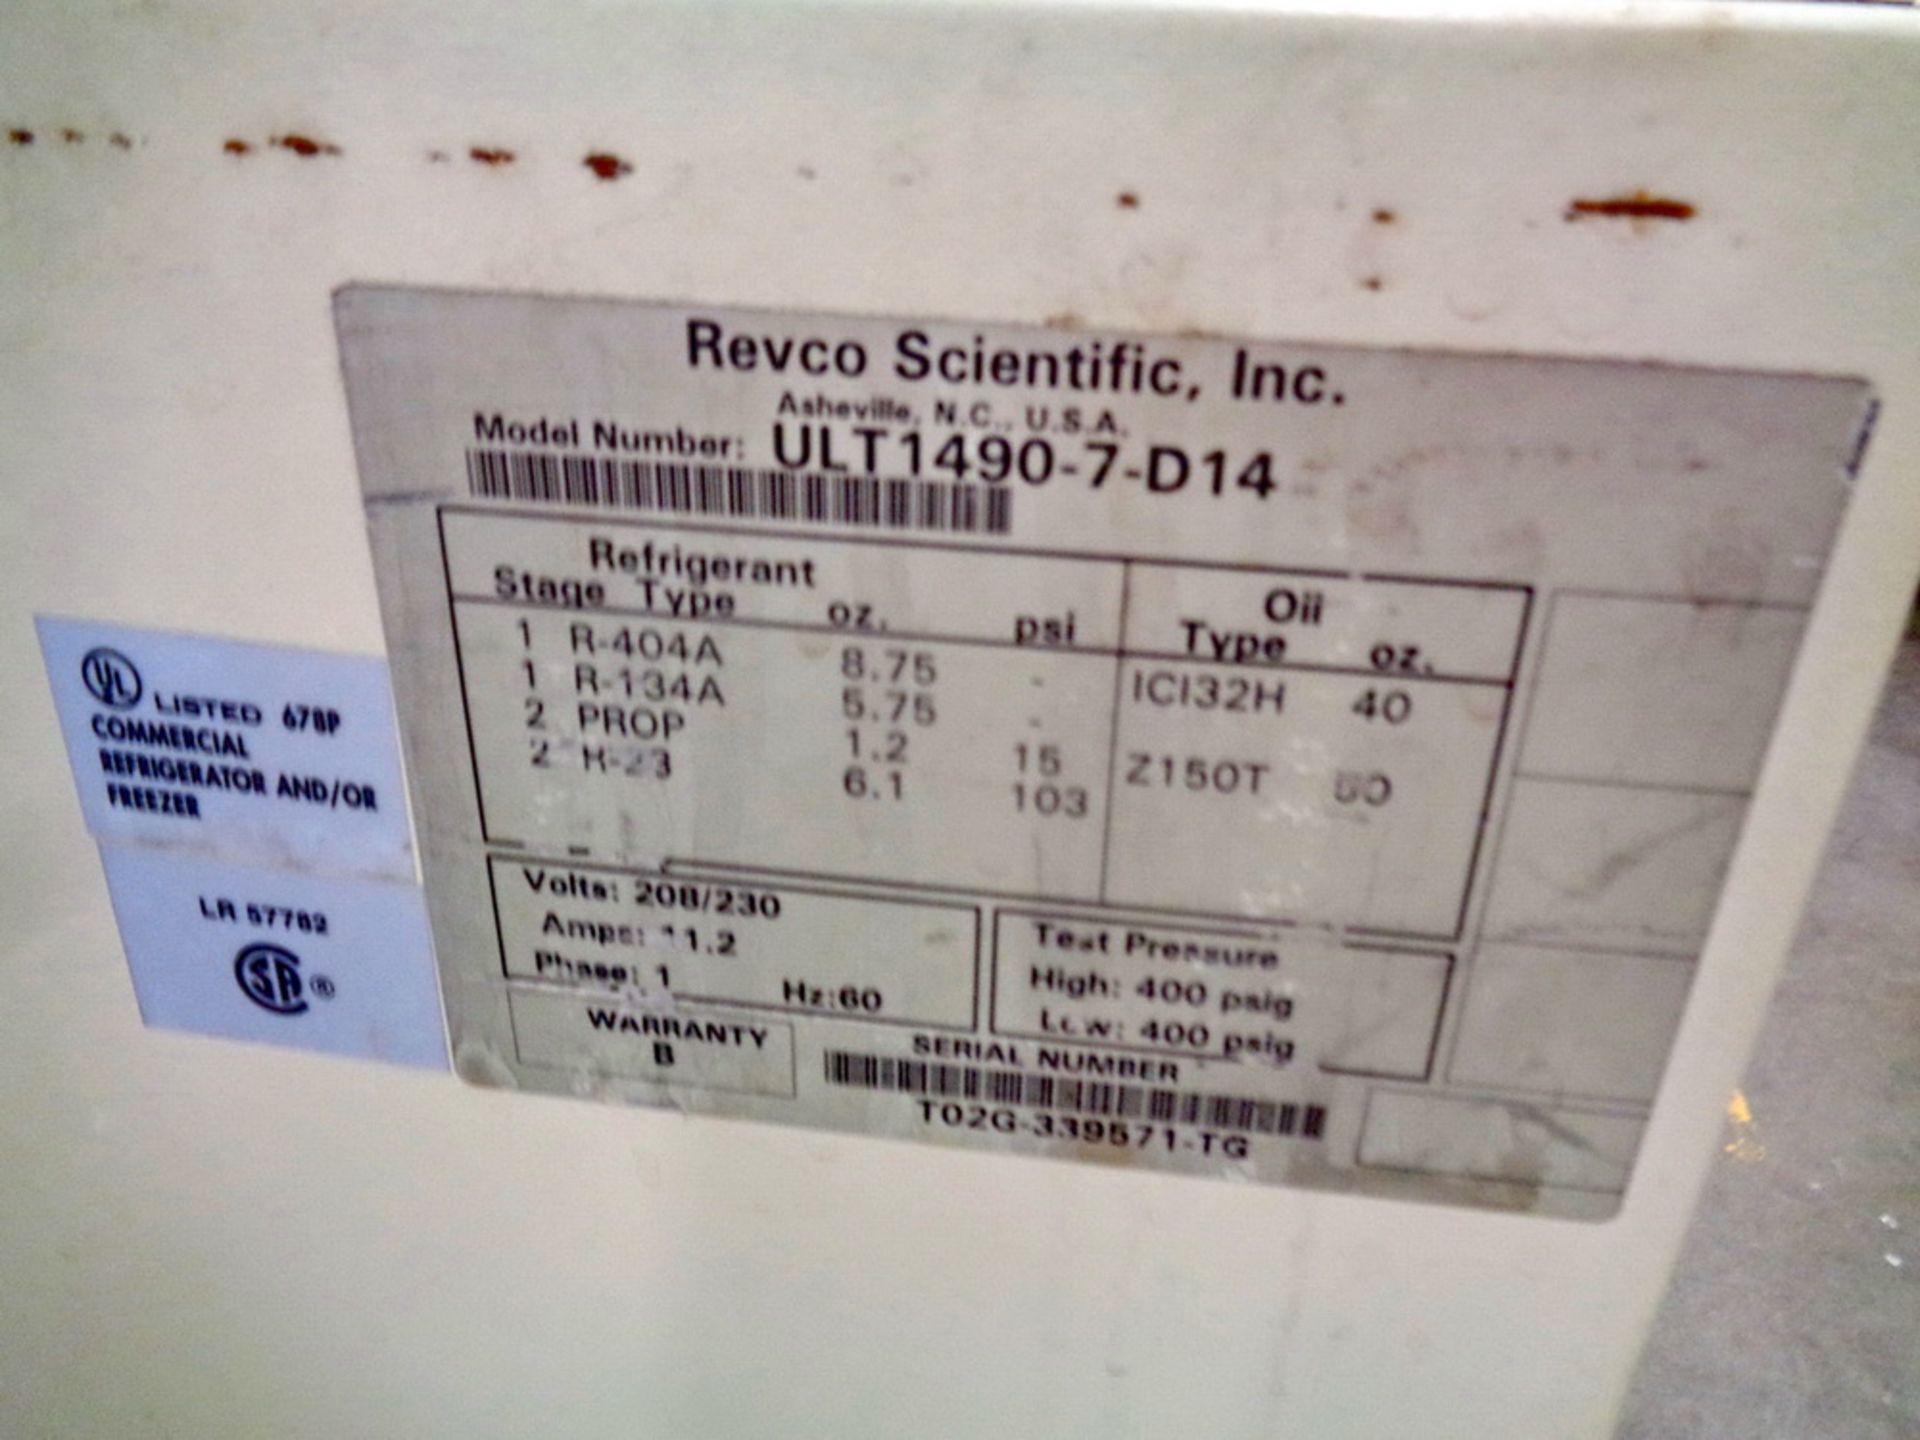 Revco Chest Type Cryofreezer, Model ULT1490-7-D14, S/N T02G-339571-TG - Bild 4 aus 5